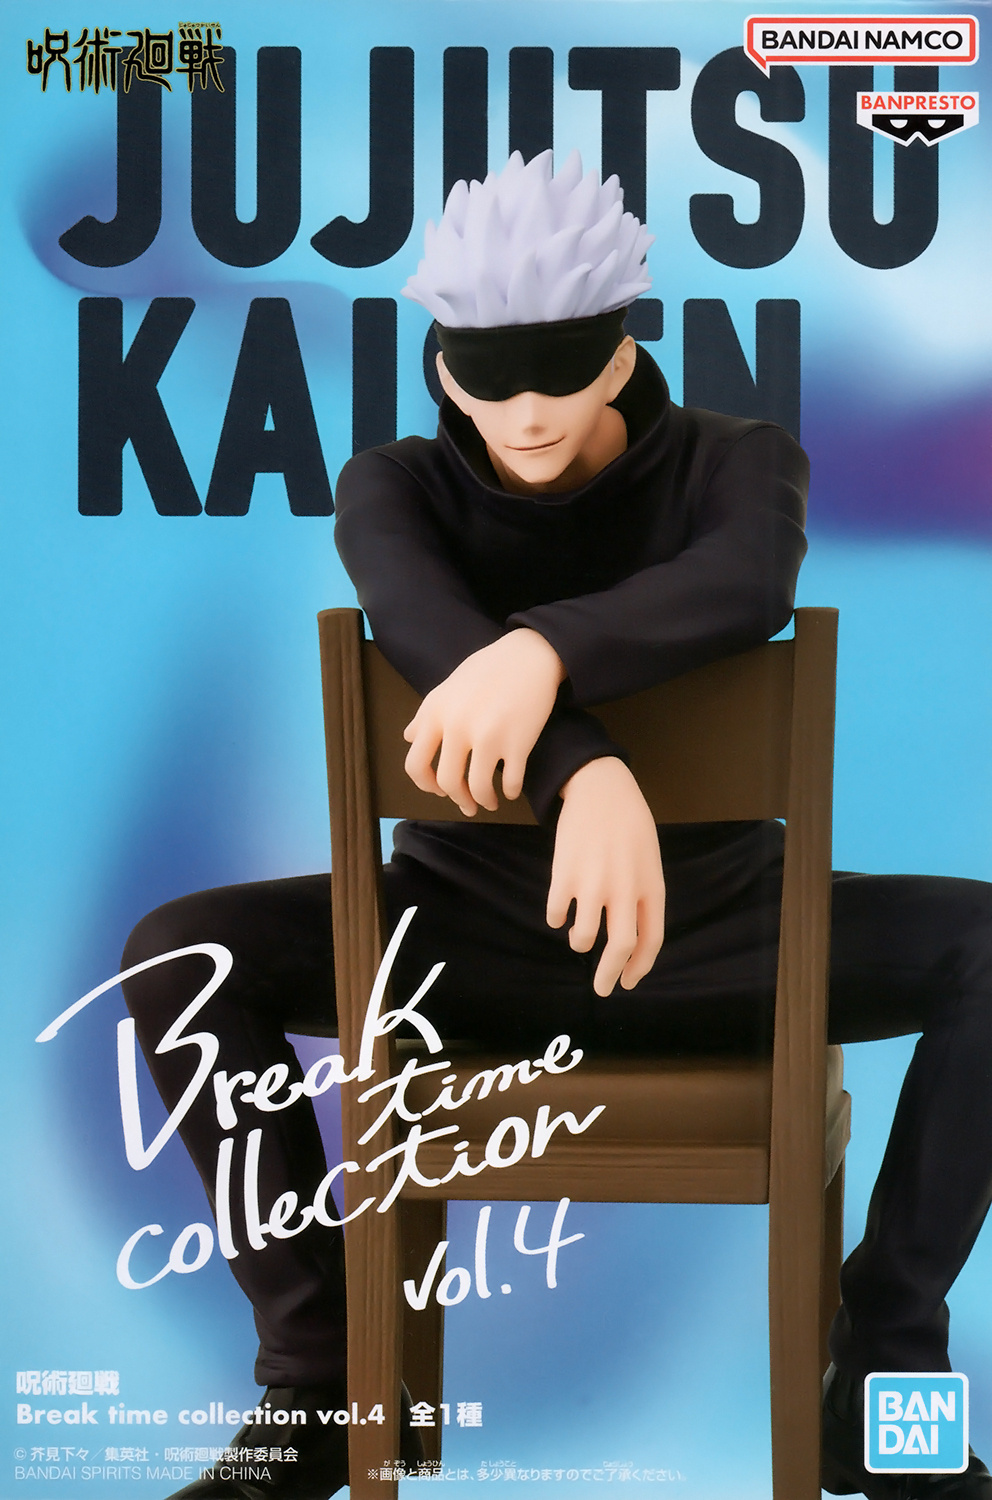 [Pre-order] Banpresto "Jujutsu Kaisen" Break Time Collection Vol.4 - Gojo Satoru